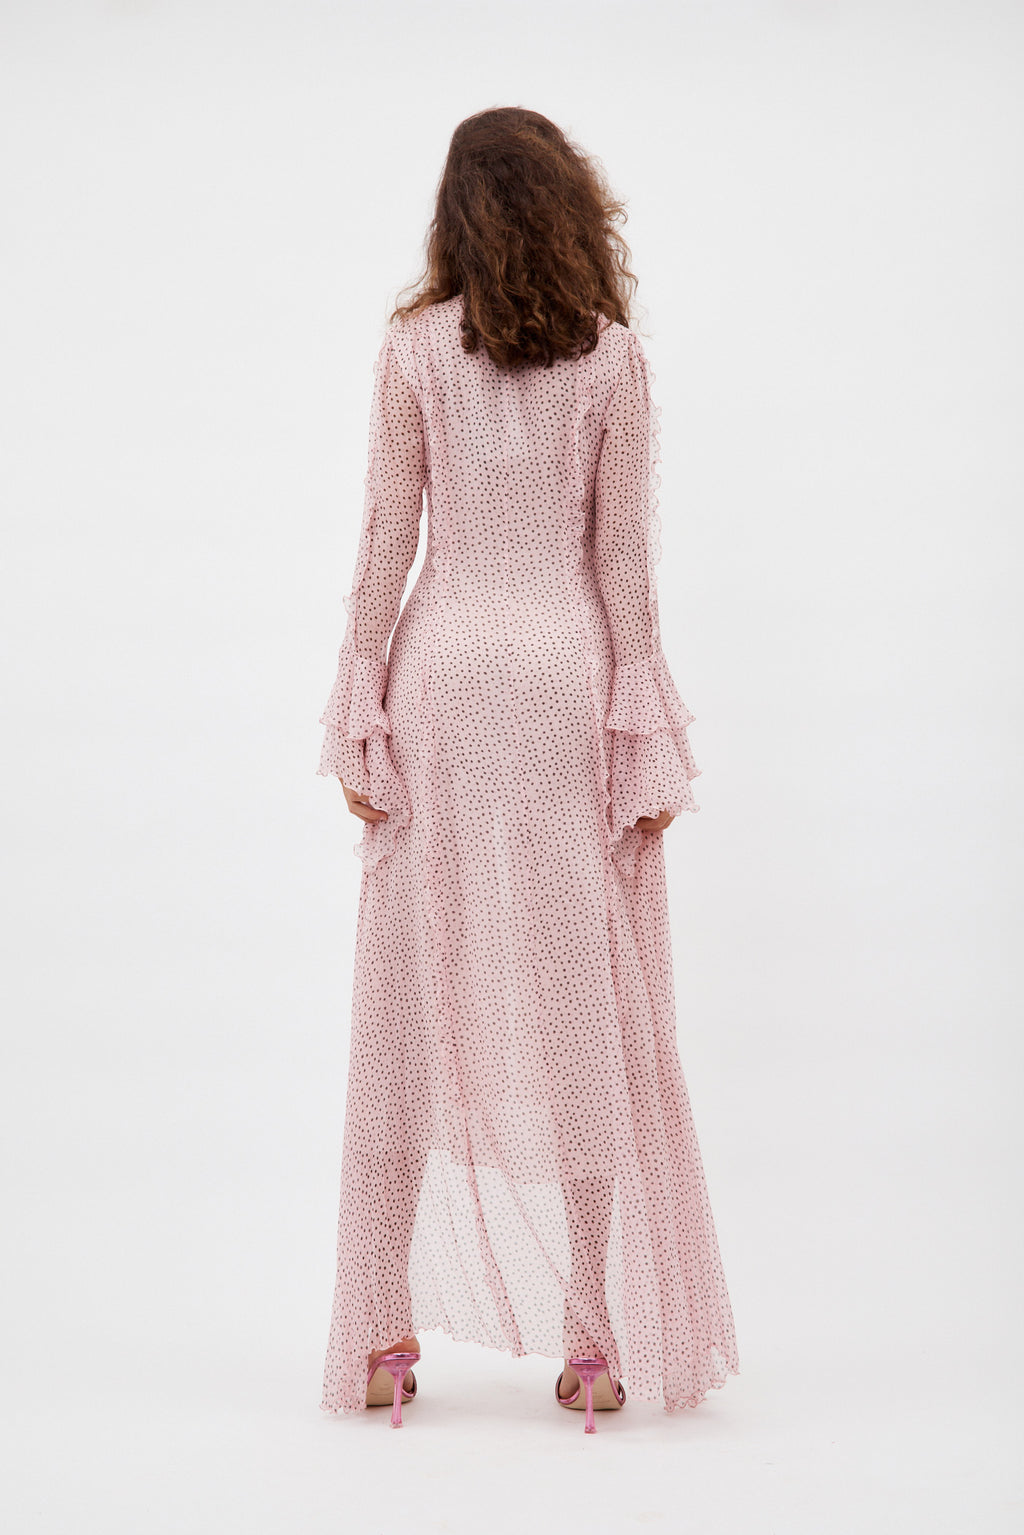 Long Sleeve Rosa Nero Printed Maxi Dress